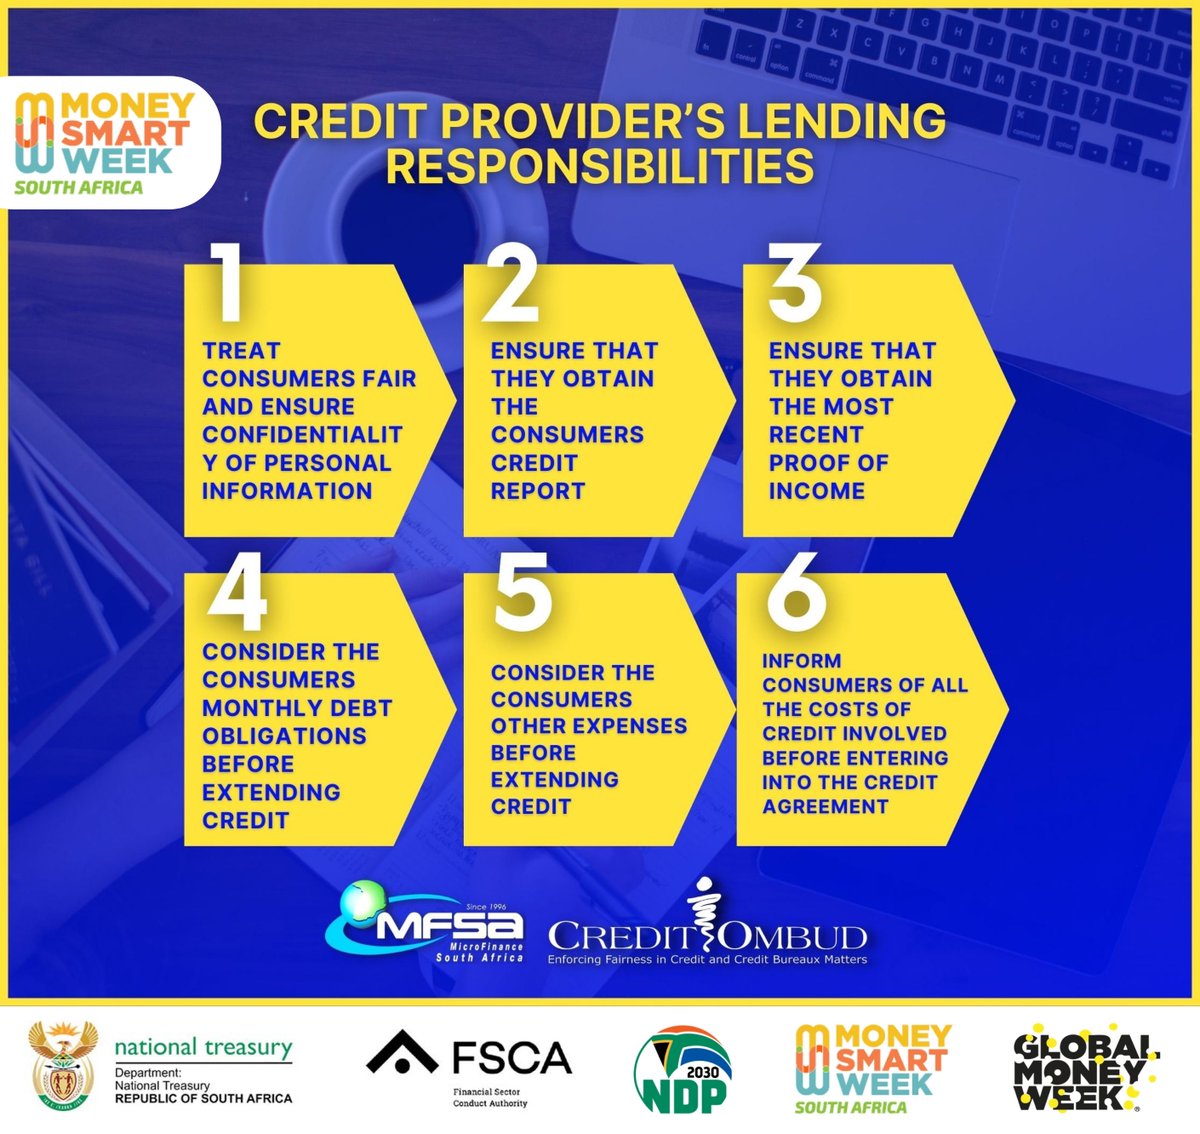 Plan your money, Plant your future - Money Smart Week SA 2023

#ResponsibleLending
#MSWSA2023

@Credit_Ombud @MSW_SA